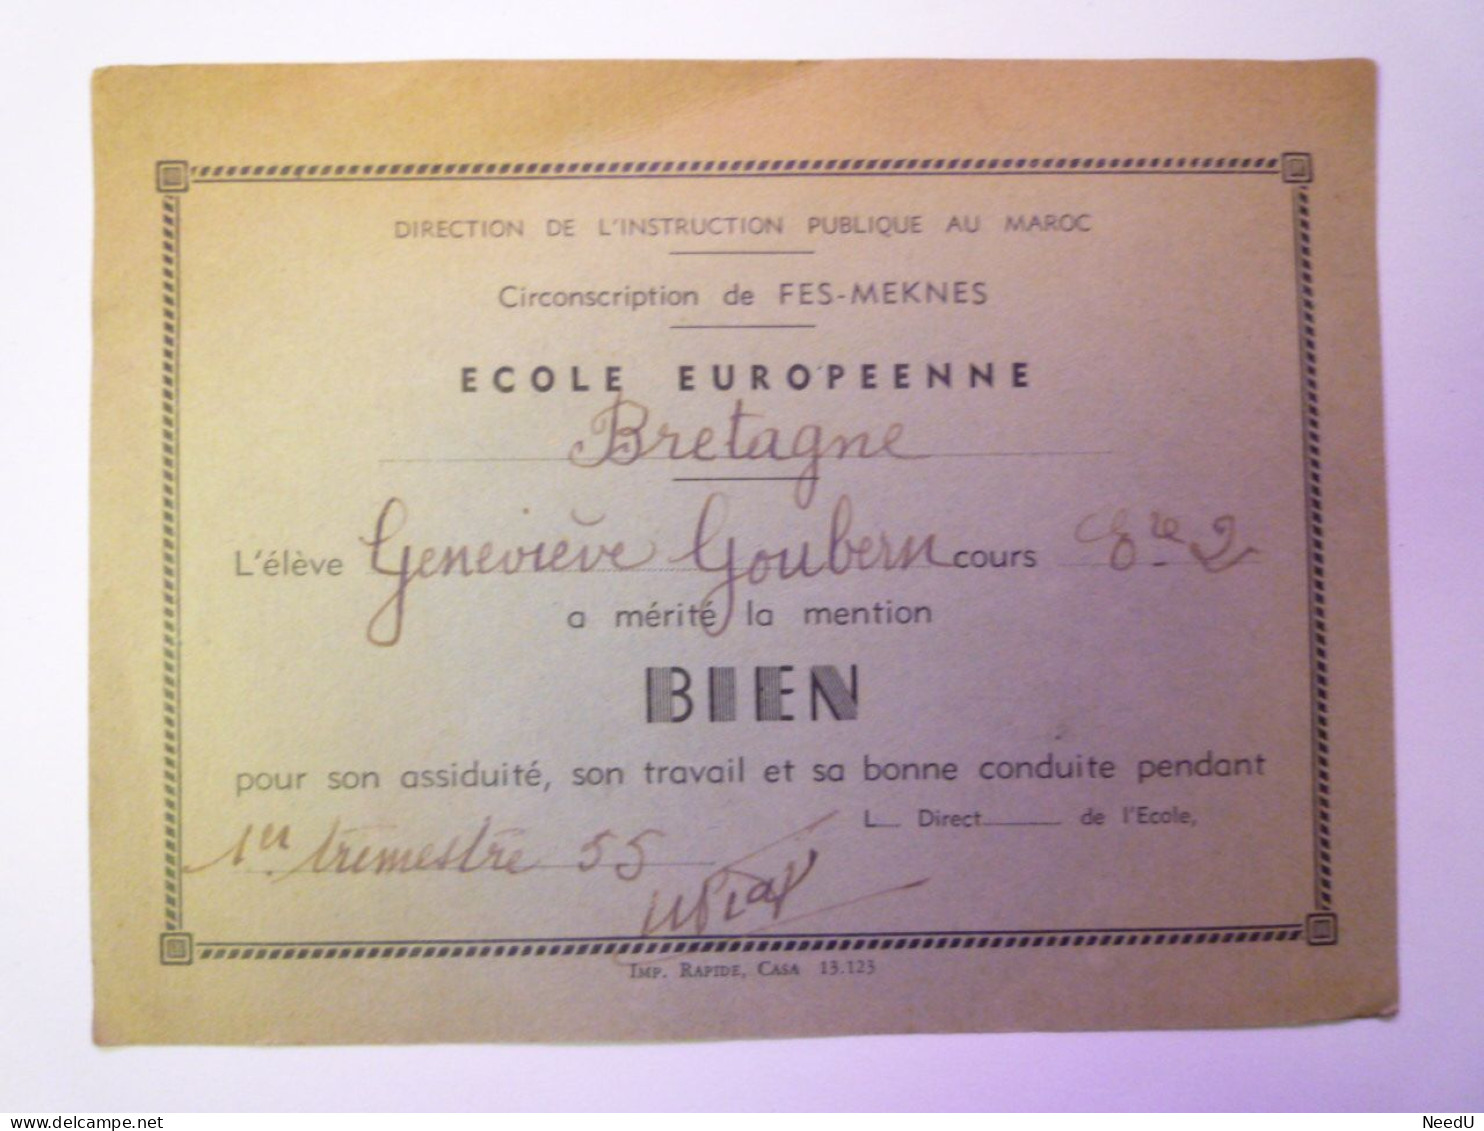 GP 2024 - 4  ECOLE EUROPEENNE  "BRETAGNE"  (Maroc  -  FES-MEKNES)  MENTION BIEN  1955   XXX - Diplome Und Schulzeugnisse